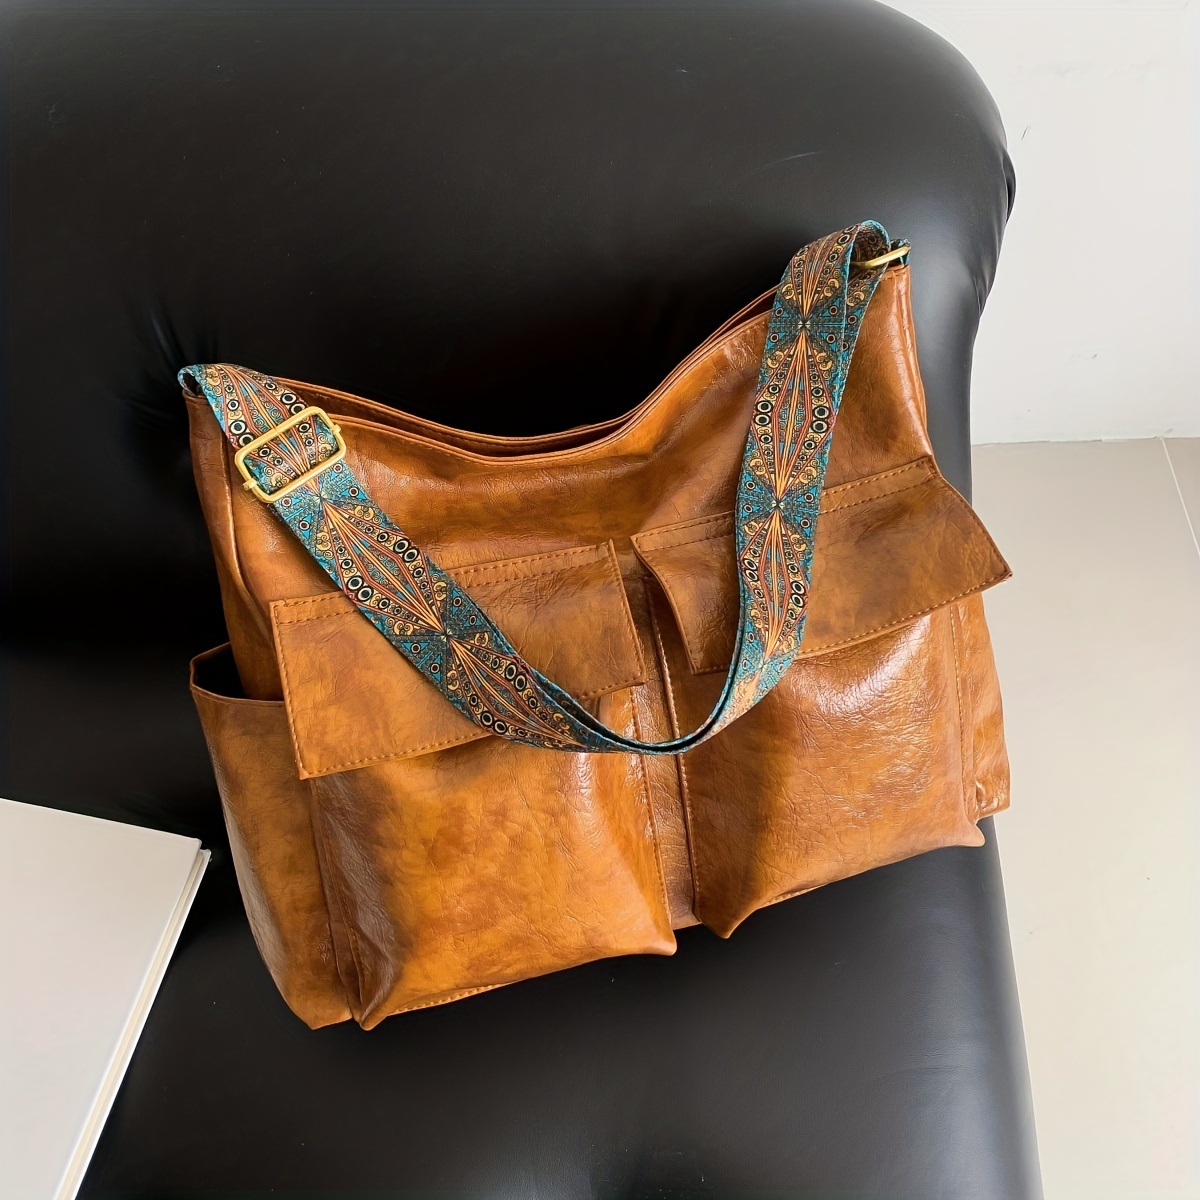 Handcrafted Black Leather Hobo-Style Boho Chic Shoulder Bag